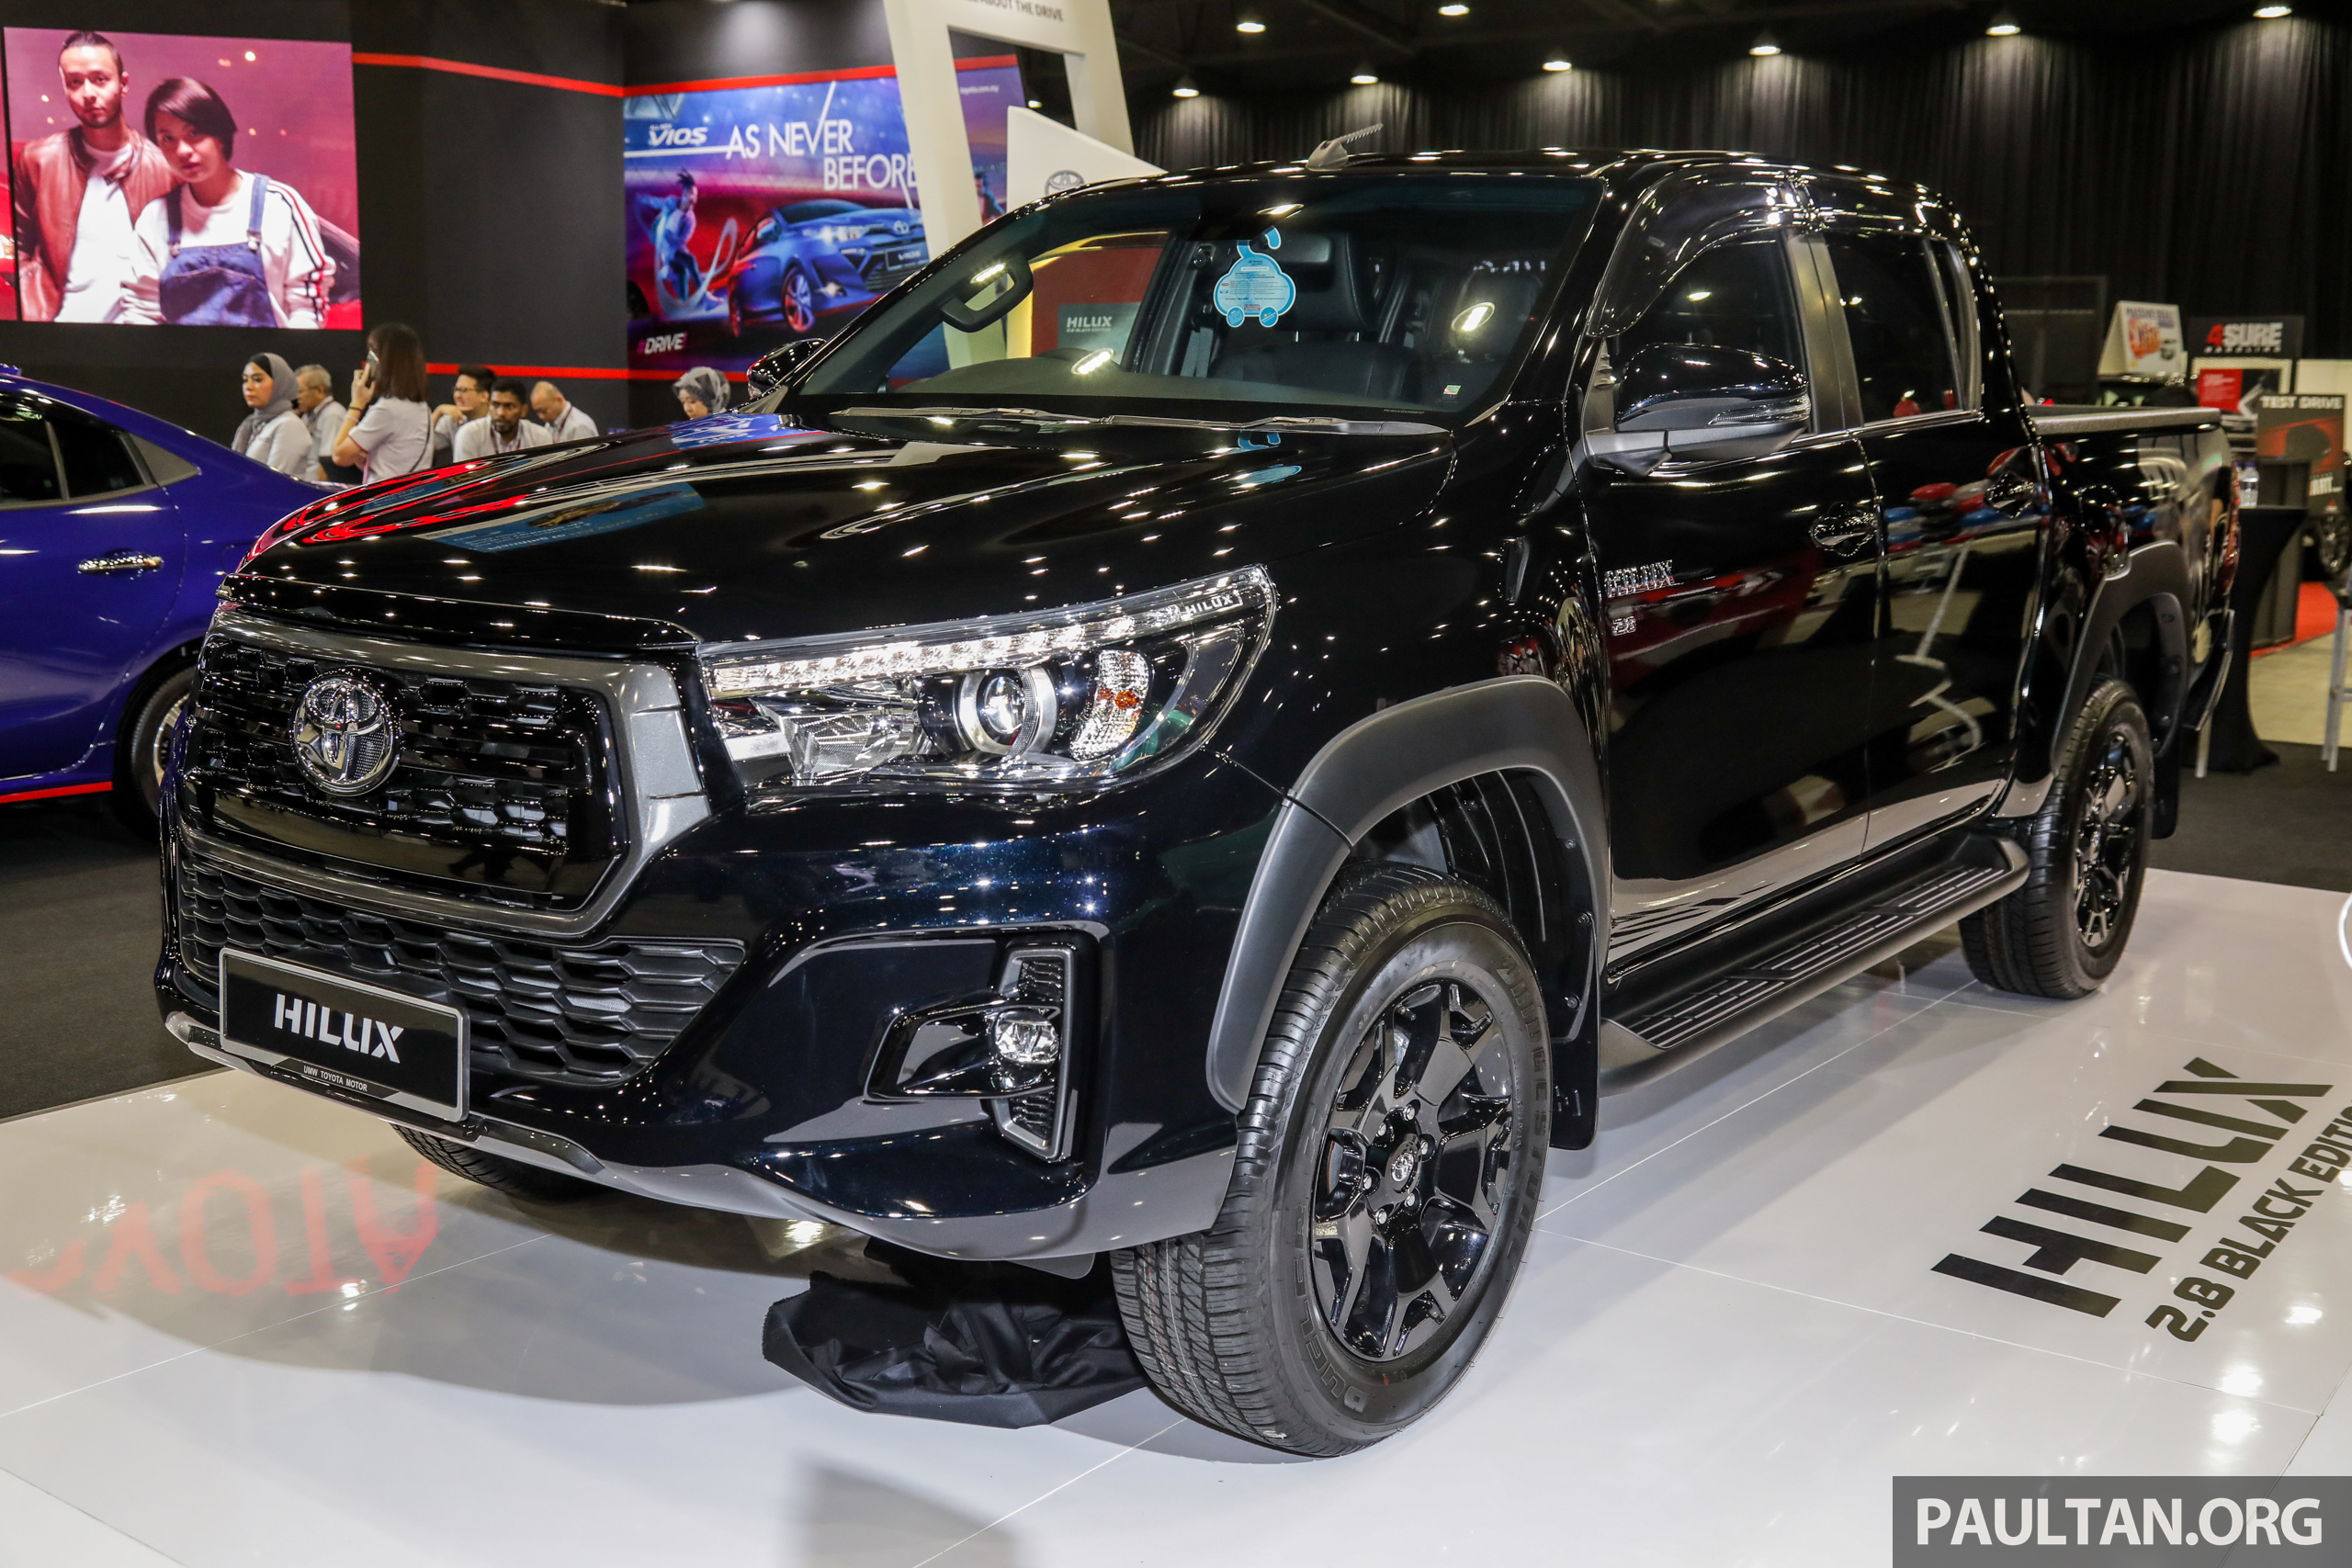 Toyota Hilux New Model 2020 Price